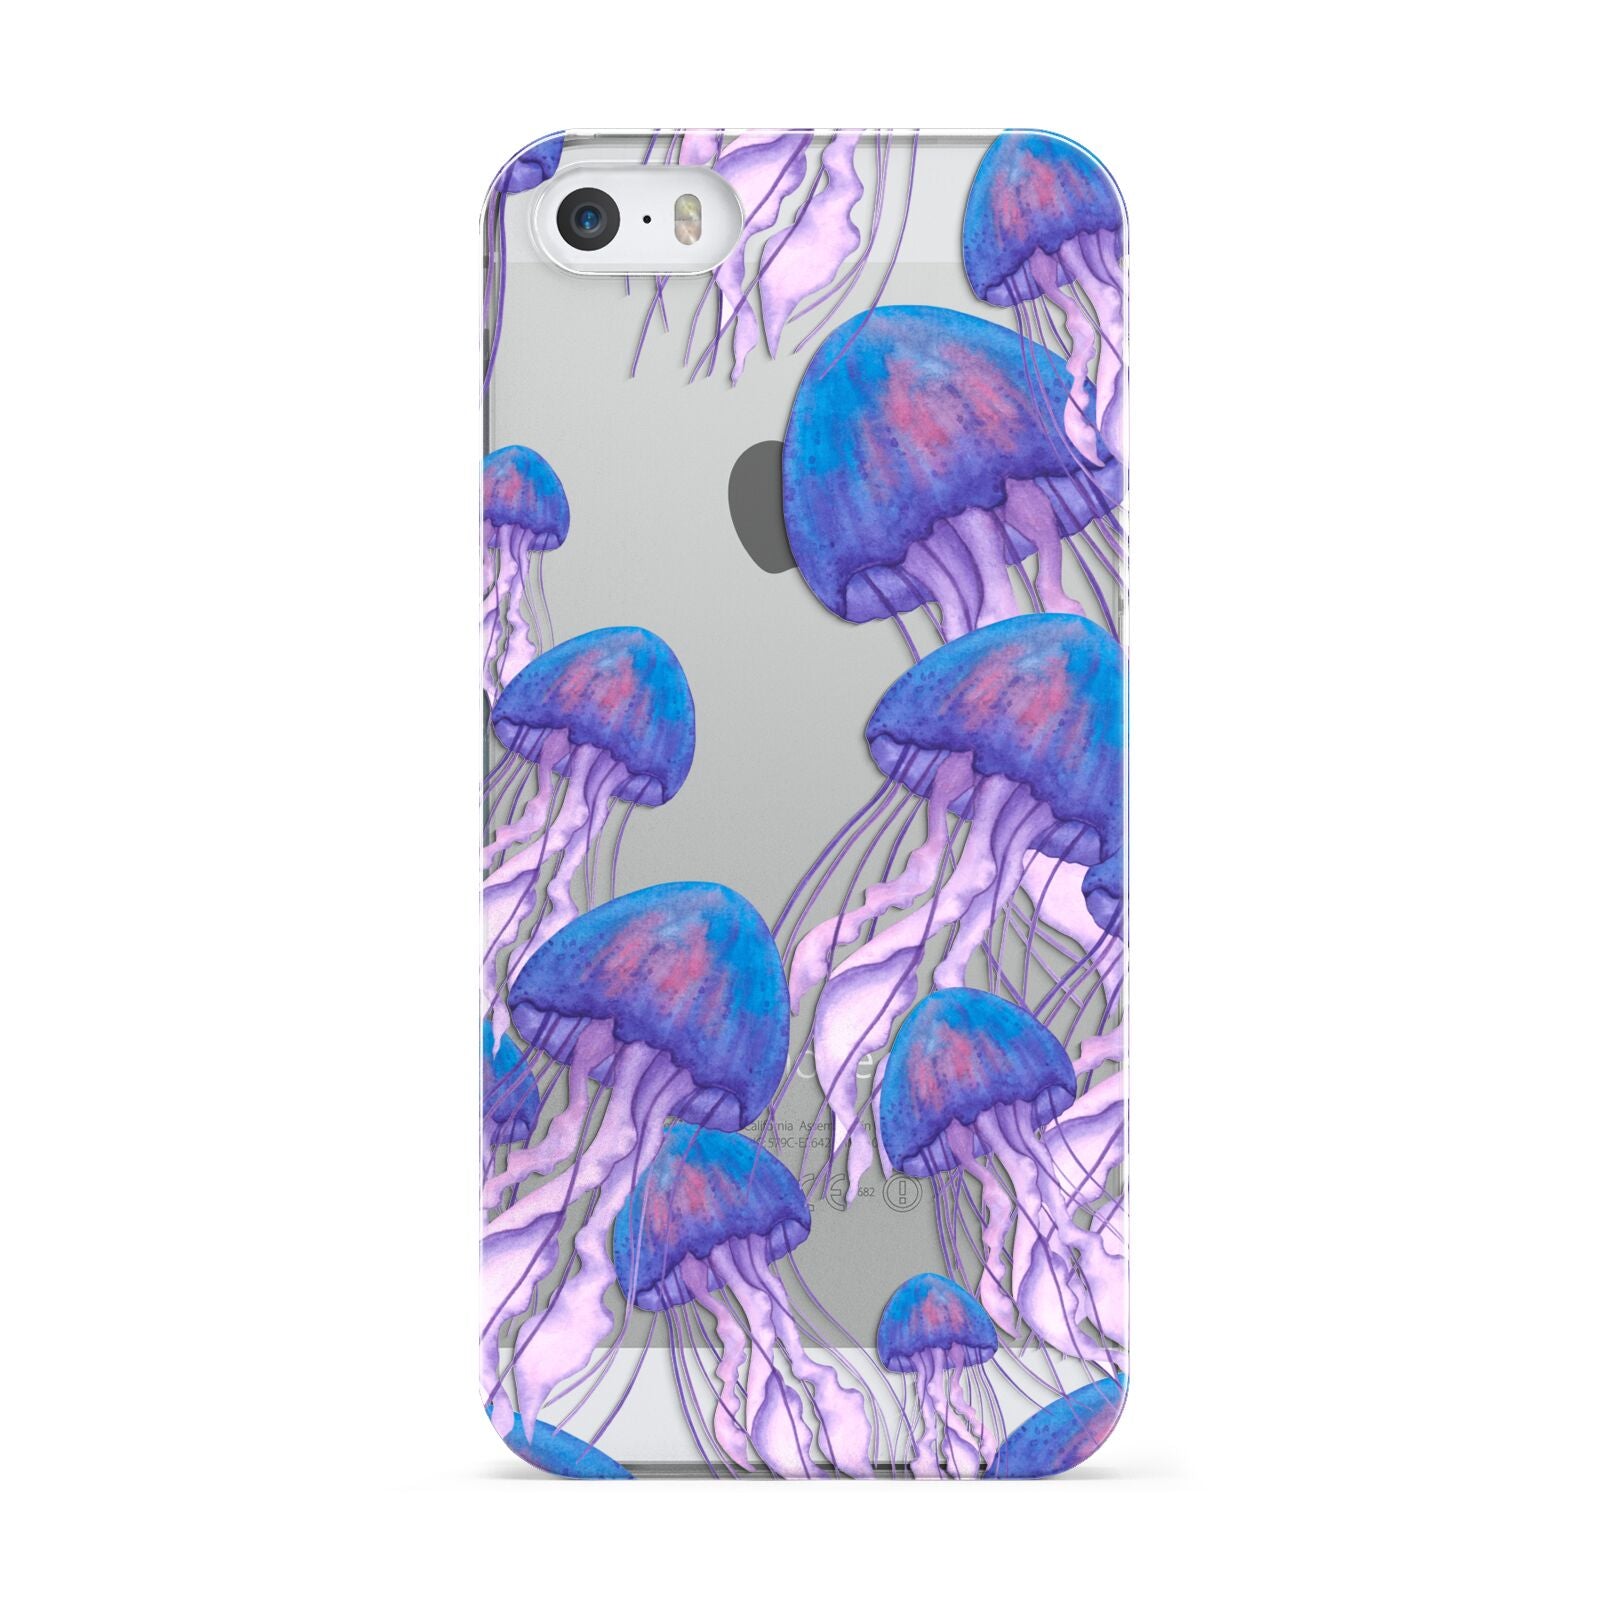 Jellyfish Apple iPhone 5 Case